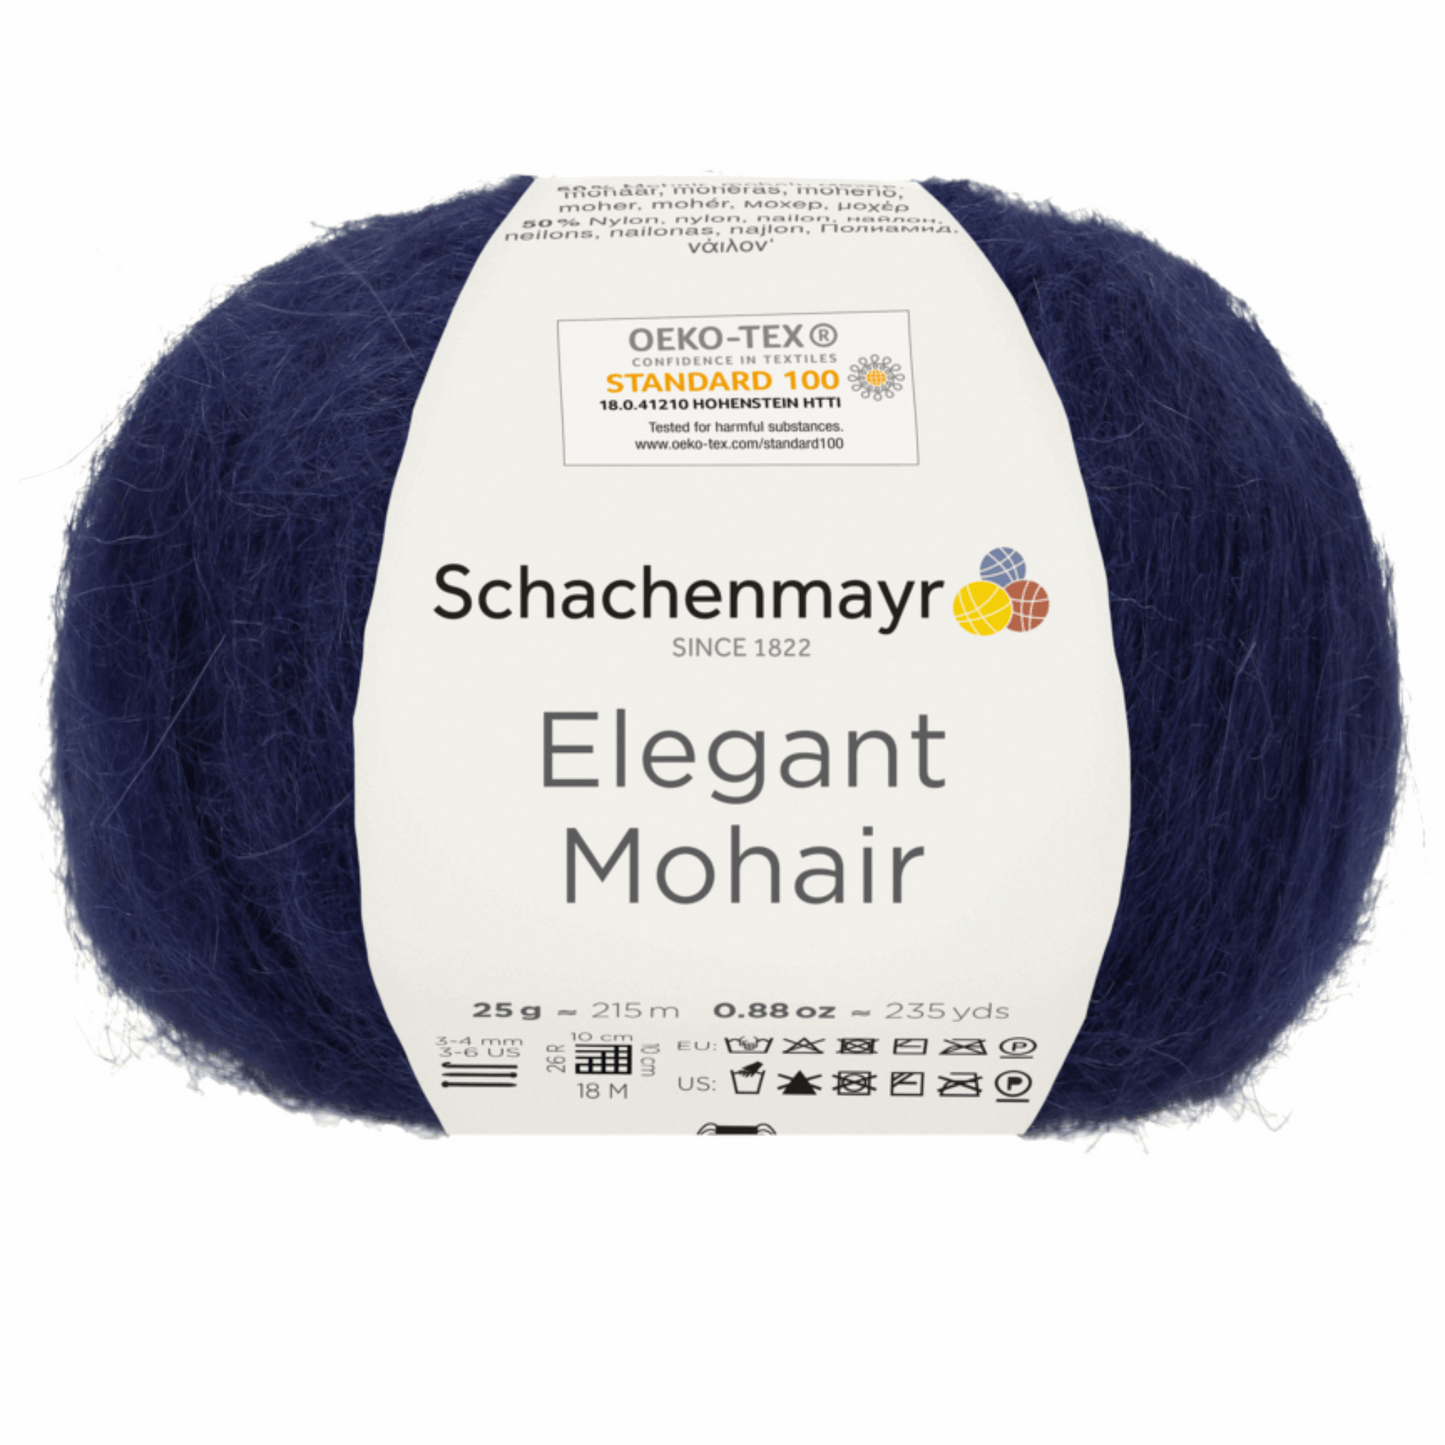 Schachenmayr Elegant Mohair 25g, 97003, color marine 50